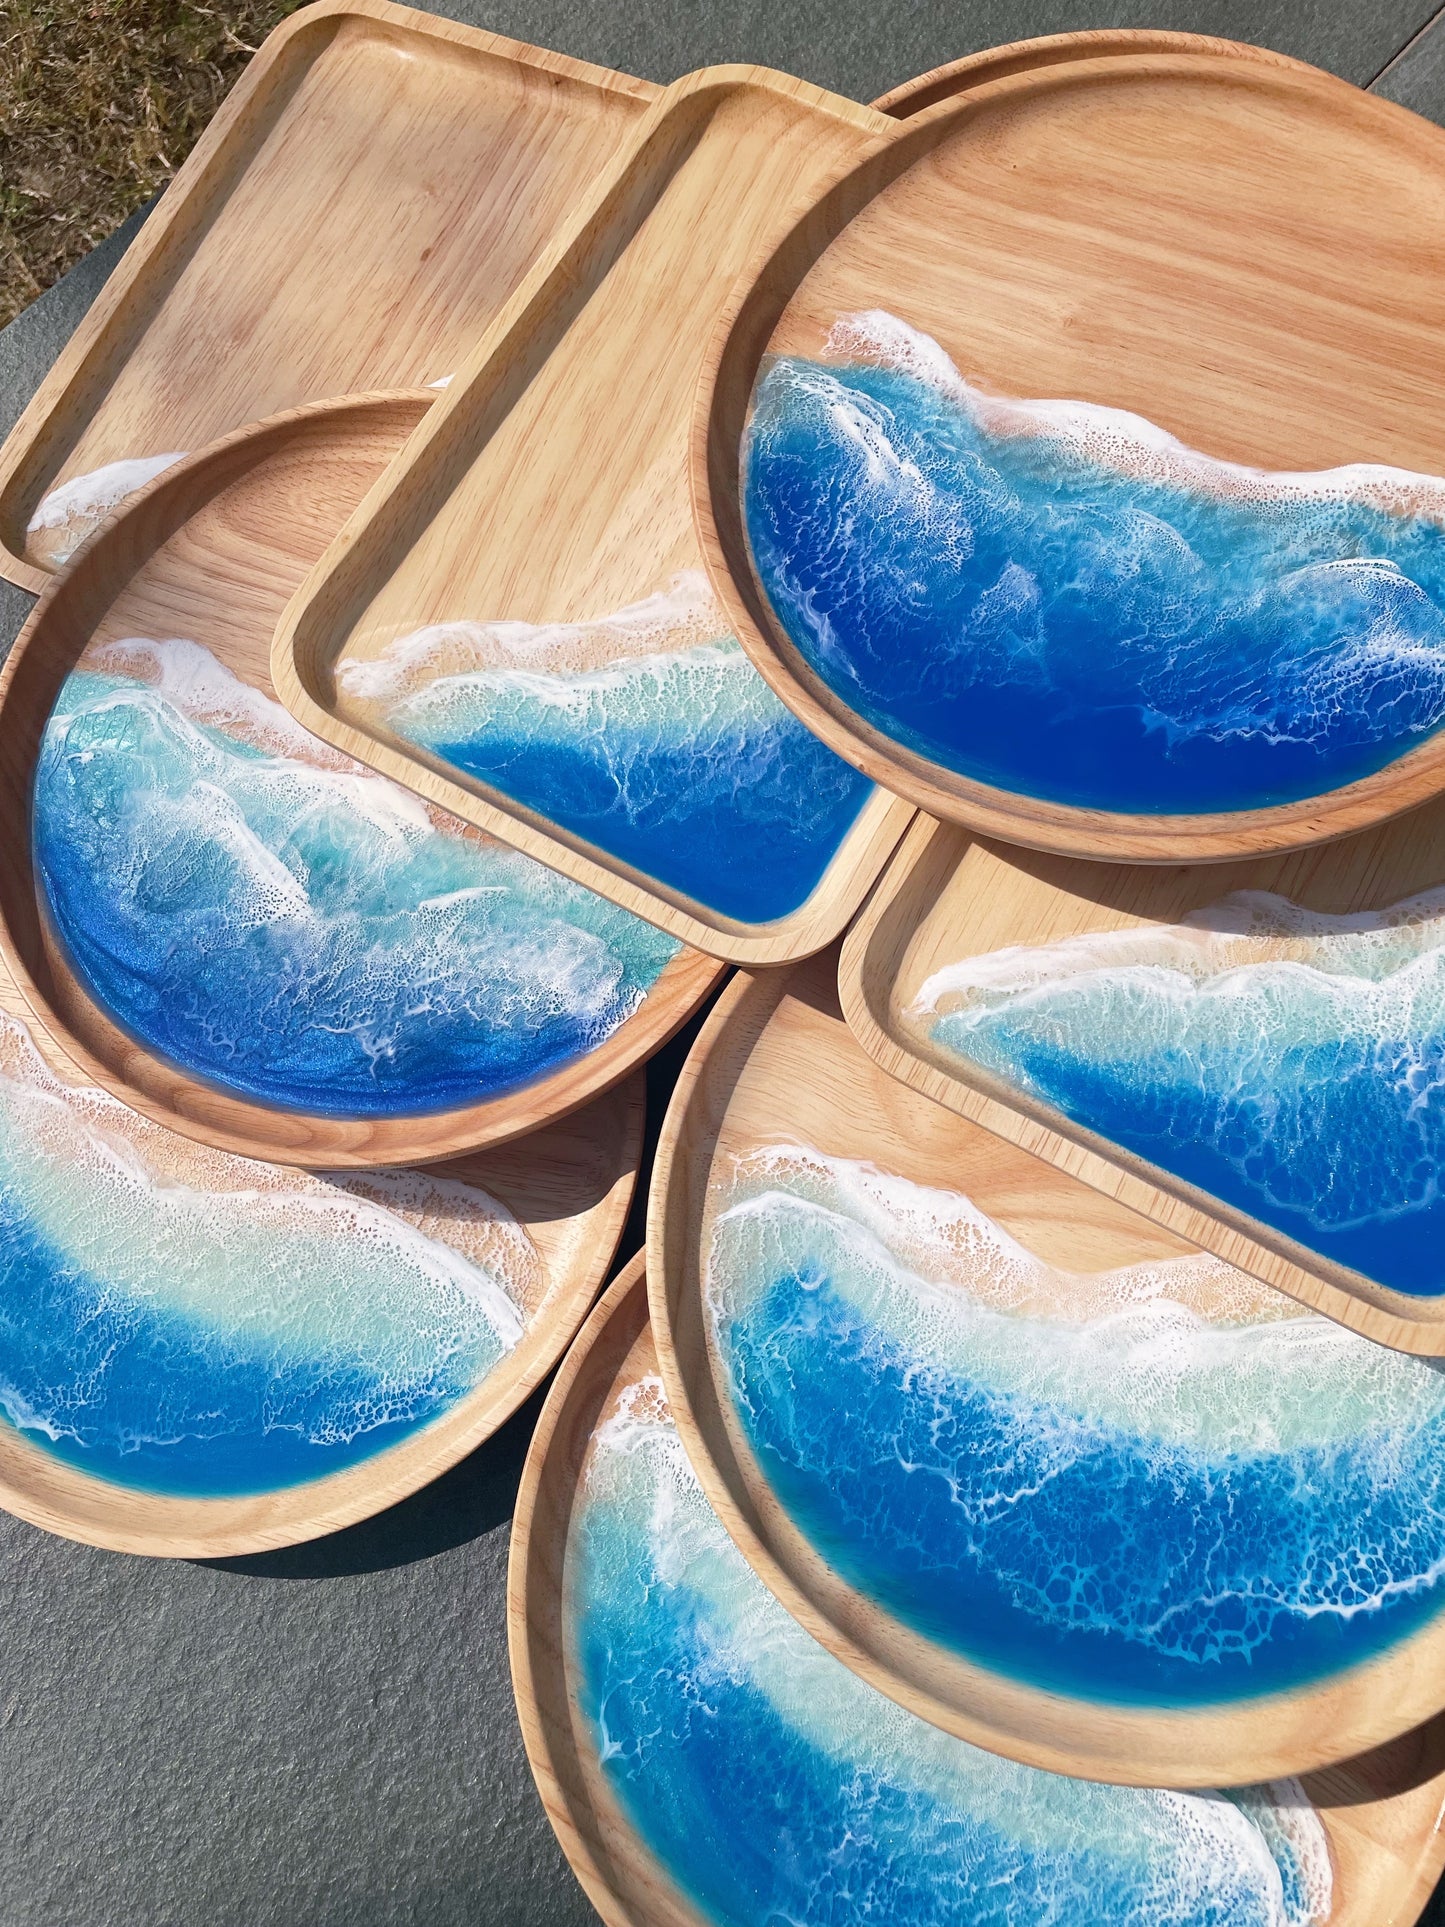 Handmade Ocean Resin Art Wooden Trays - Your Piece of the Ocean Awaits